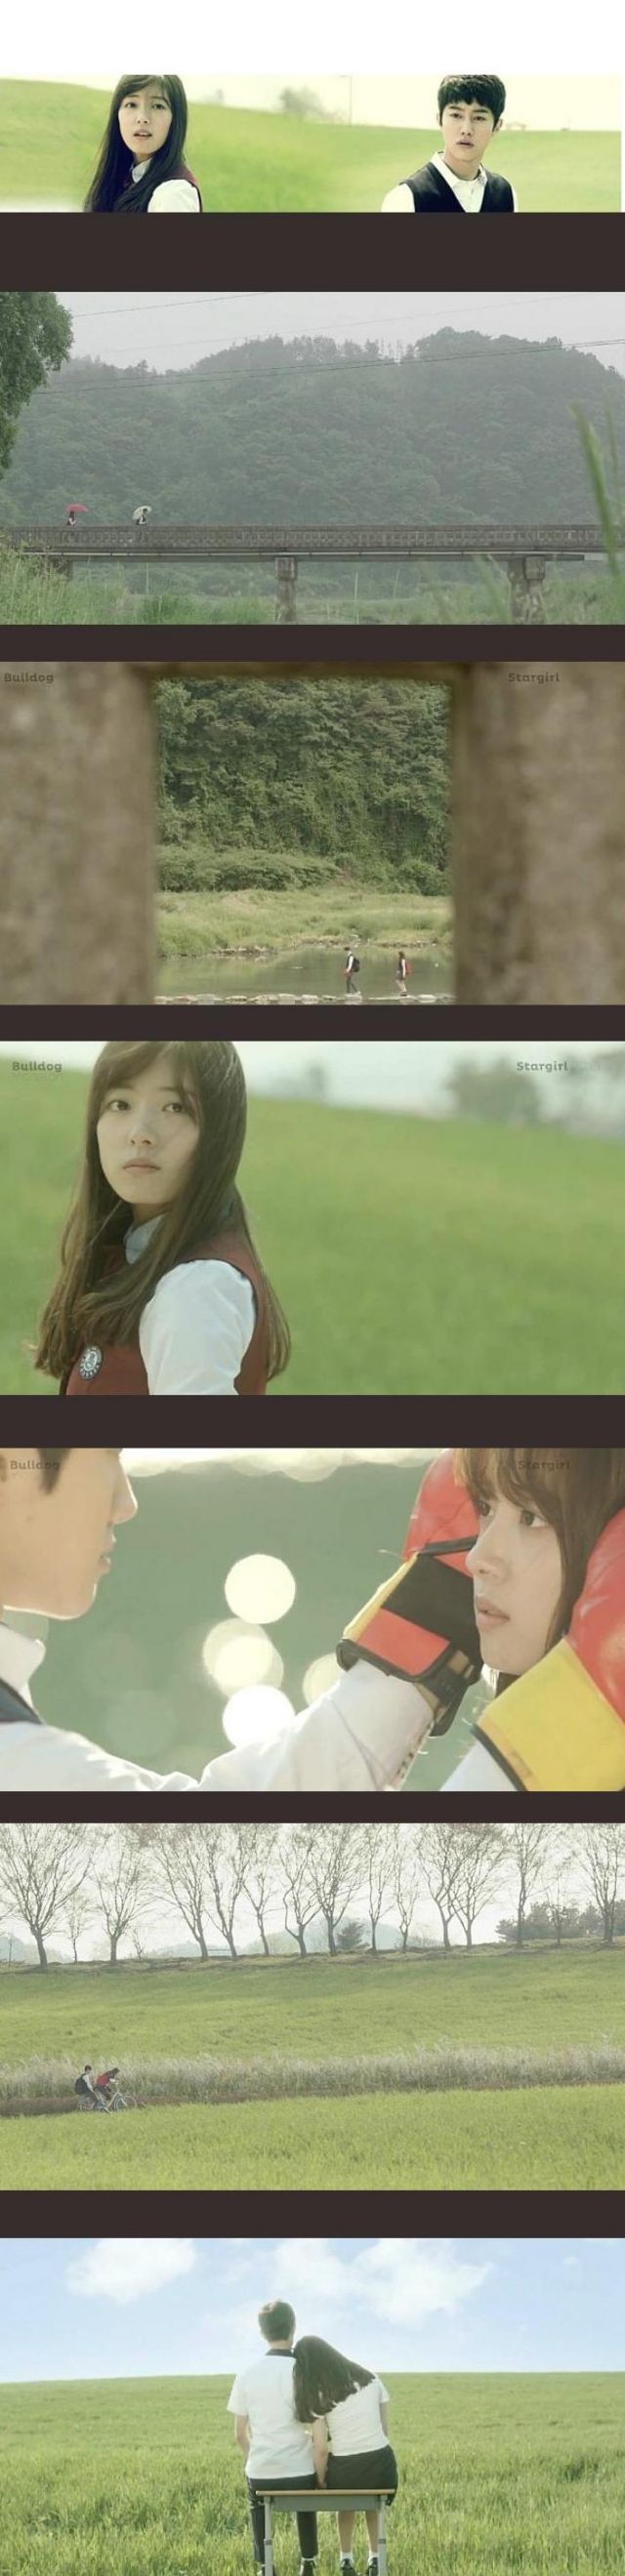 episode 2 captures for the Korean drama 'Drama Special - Adolescence Medley'